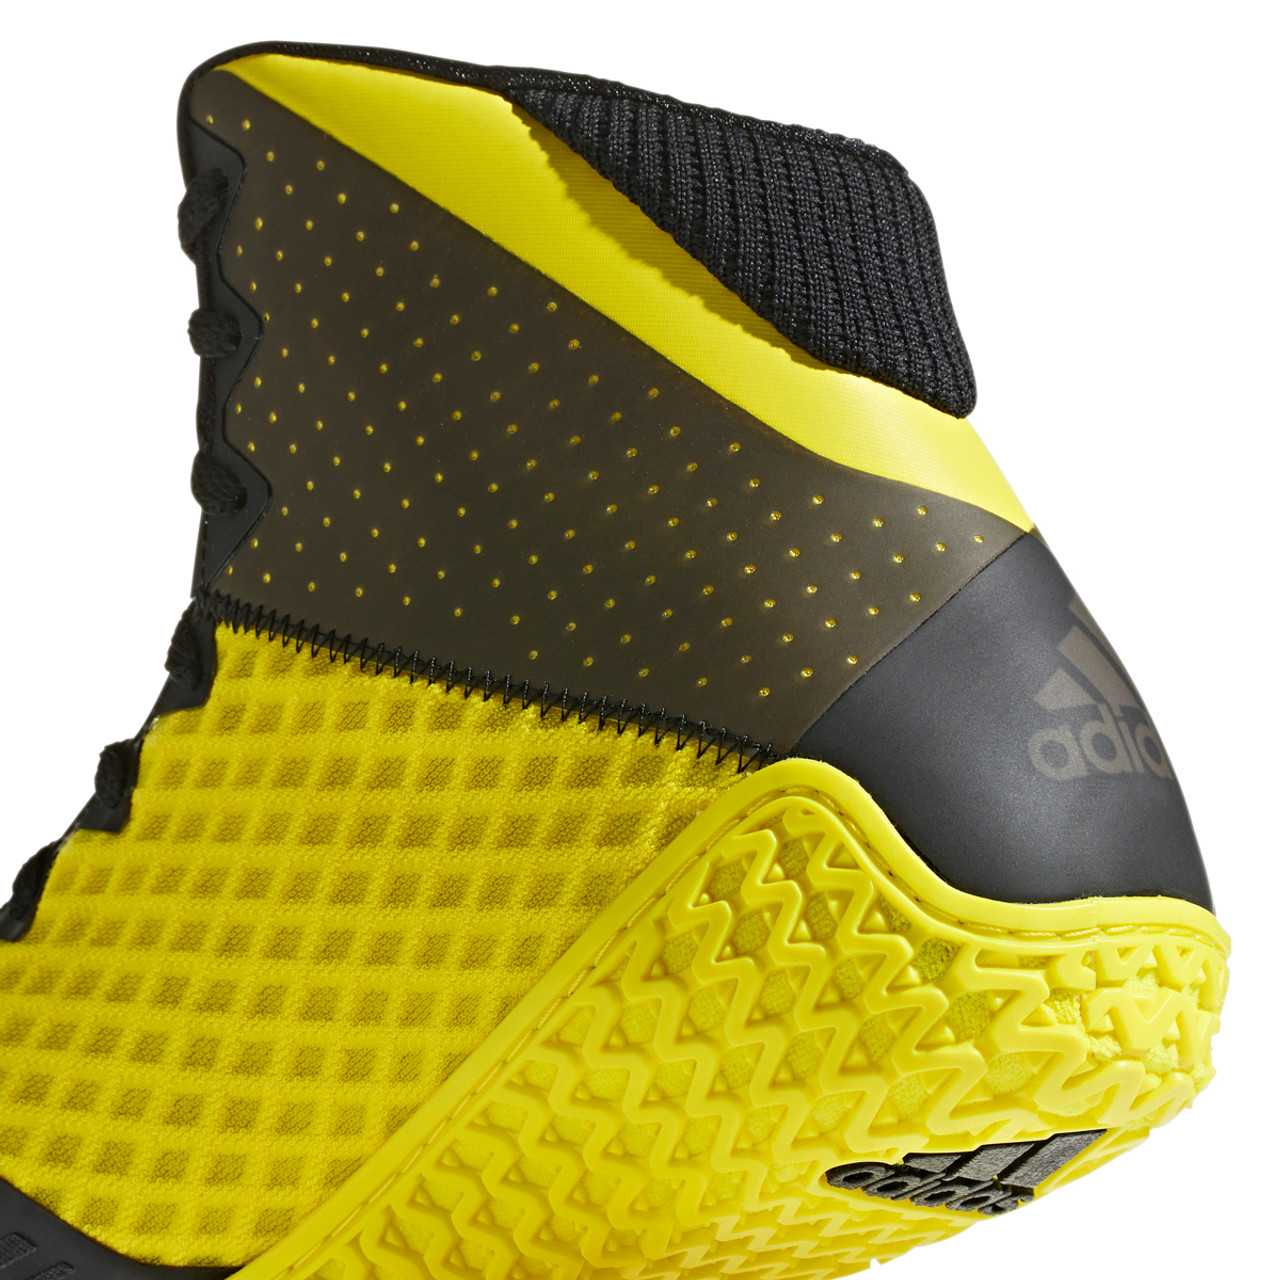 adidas Men's Mat Wizard Hype Wrestling Shoes (5.5, Black/Gold